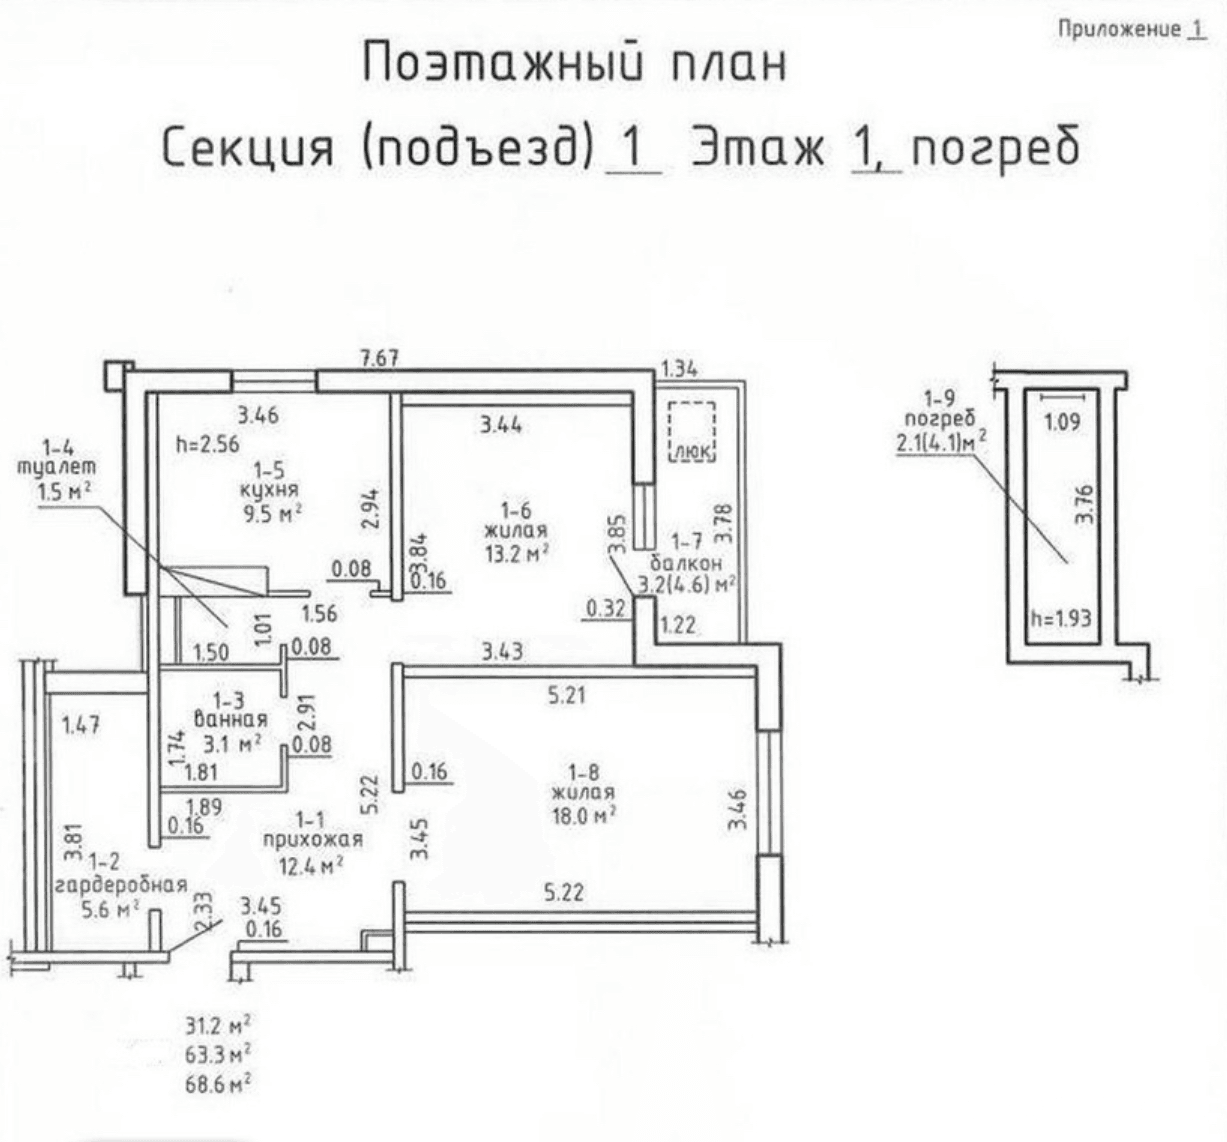 Цена продажи квартиры, Копище, ул. Михаила Миля, д. 26